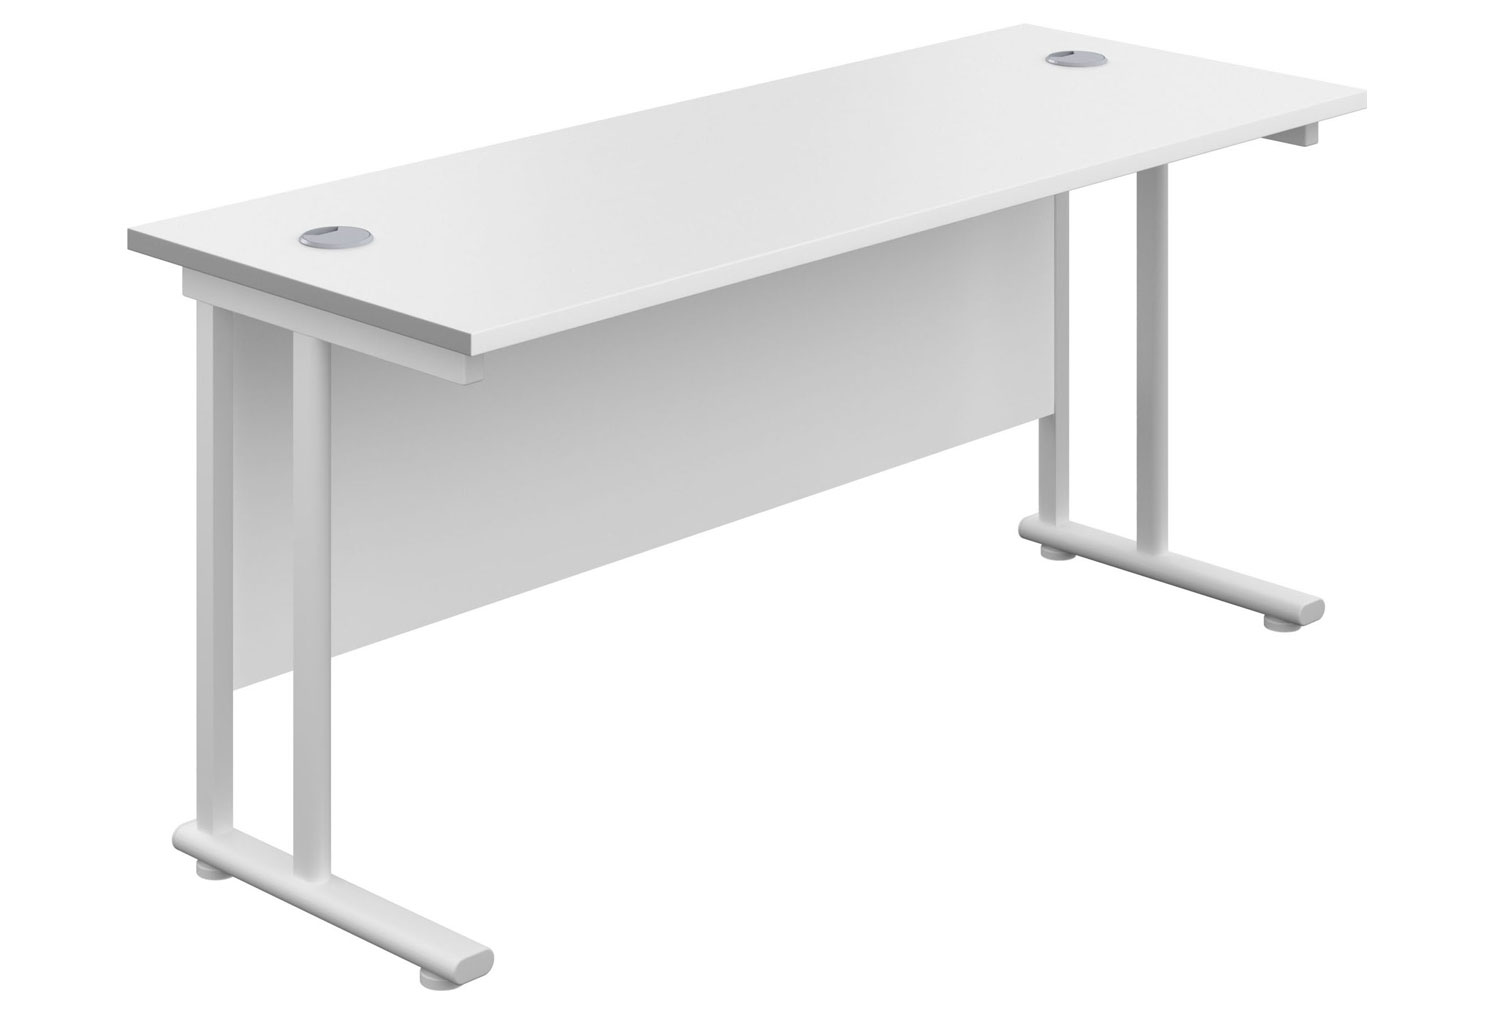 Impulse Narrow Rectangular Office Desk, 120wx60dx73h (cm), White Frame, White, Express Delivery